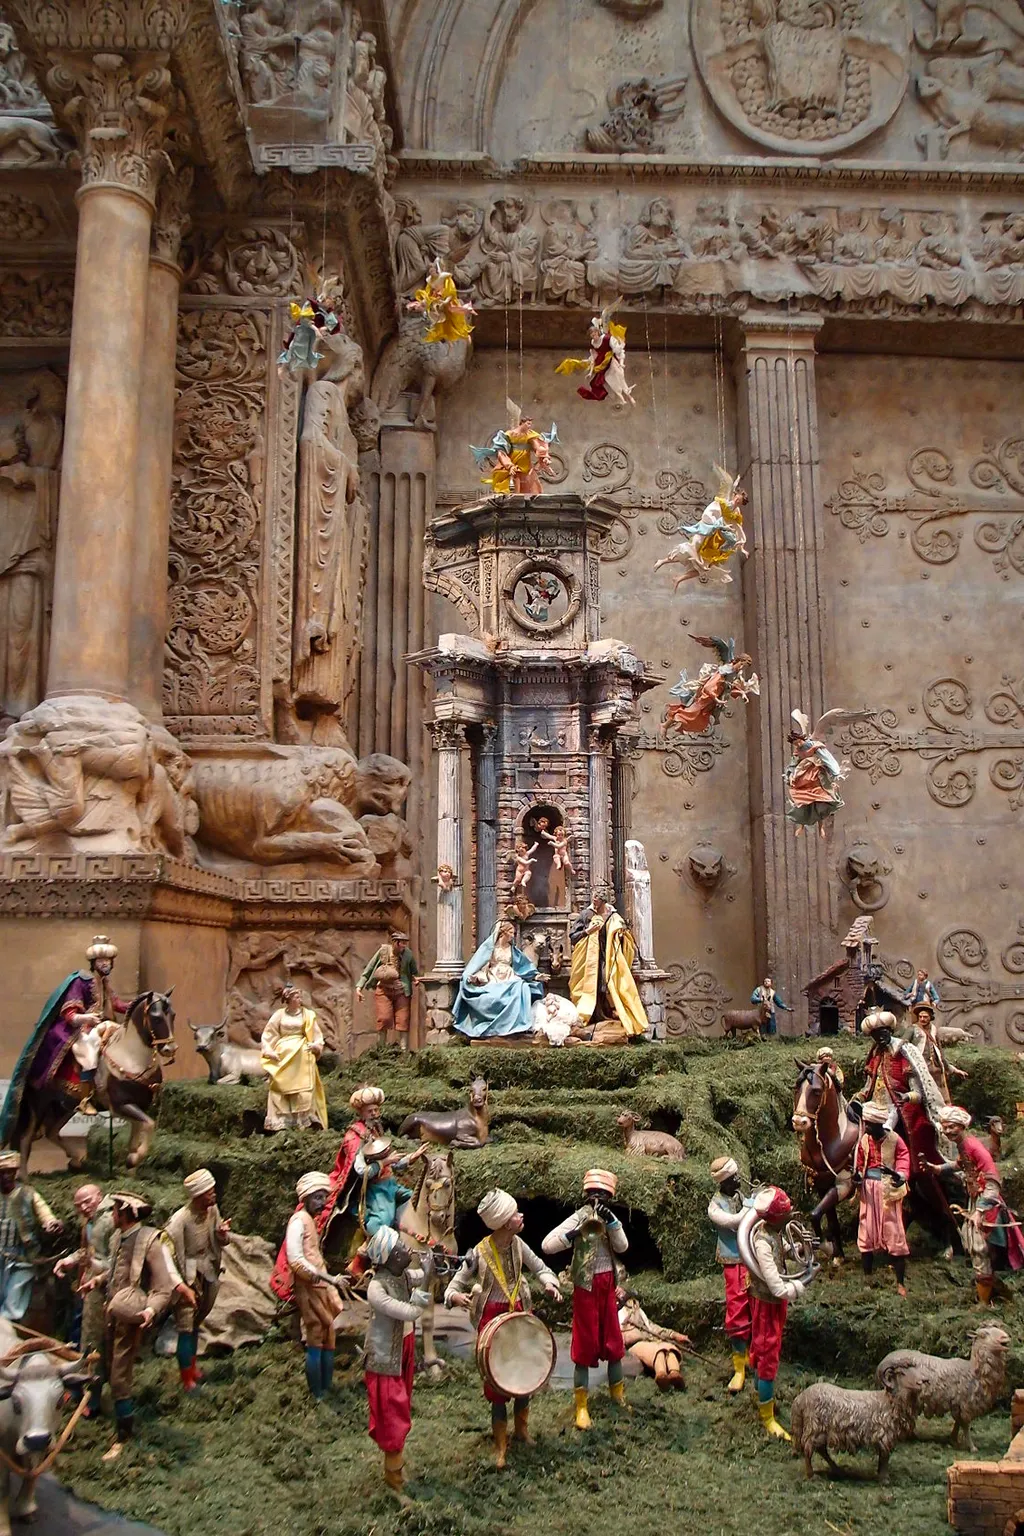 A Neapolitan Nativity scene at Carnegie Museum of Art in Pittsburgh